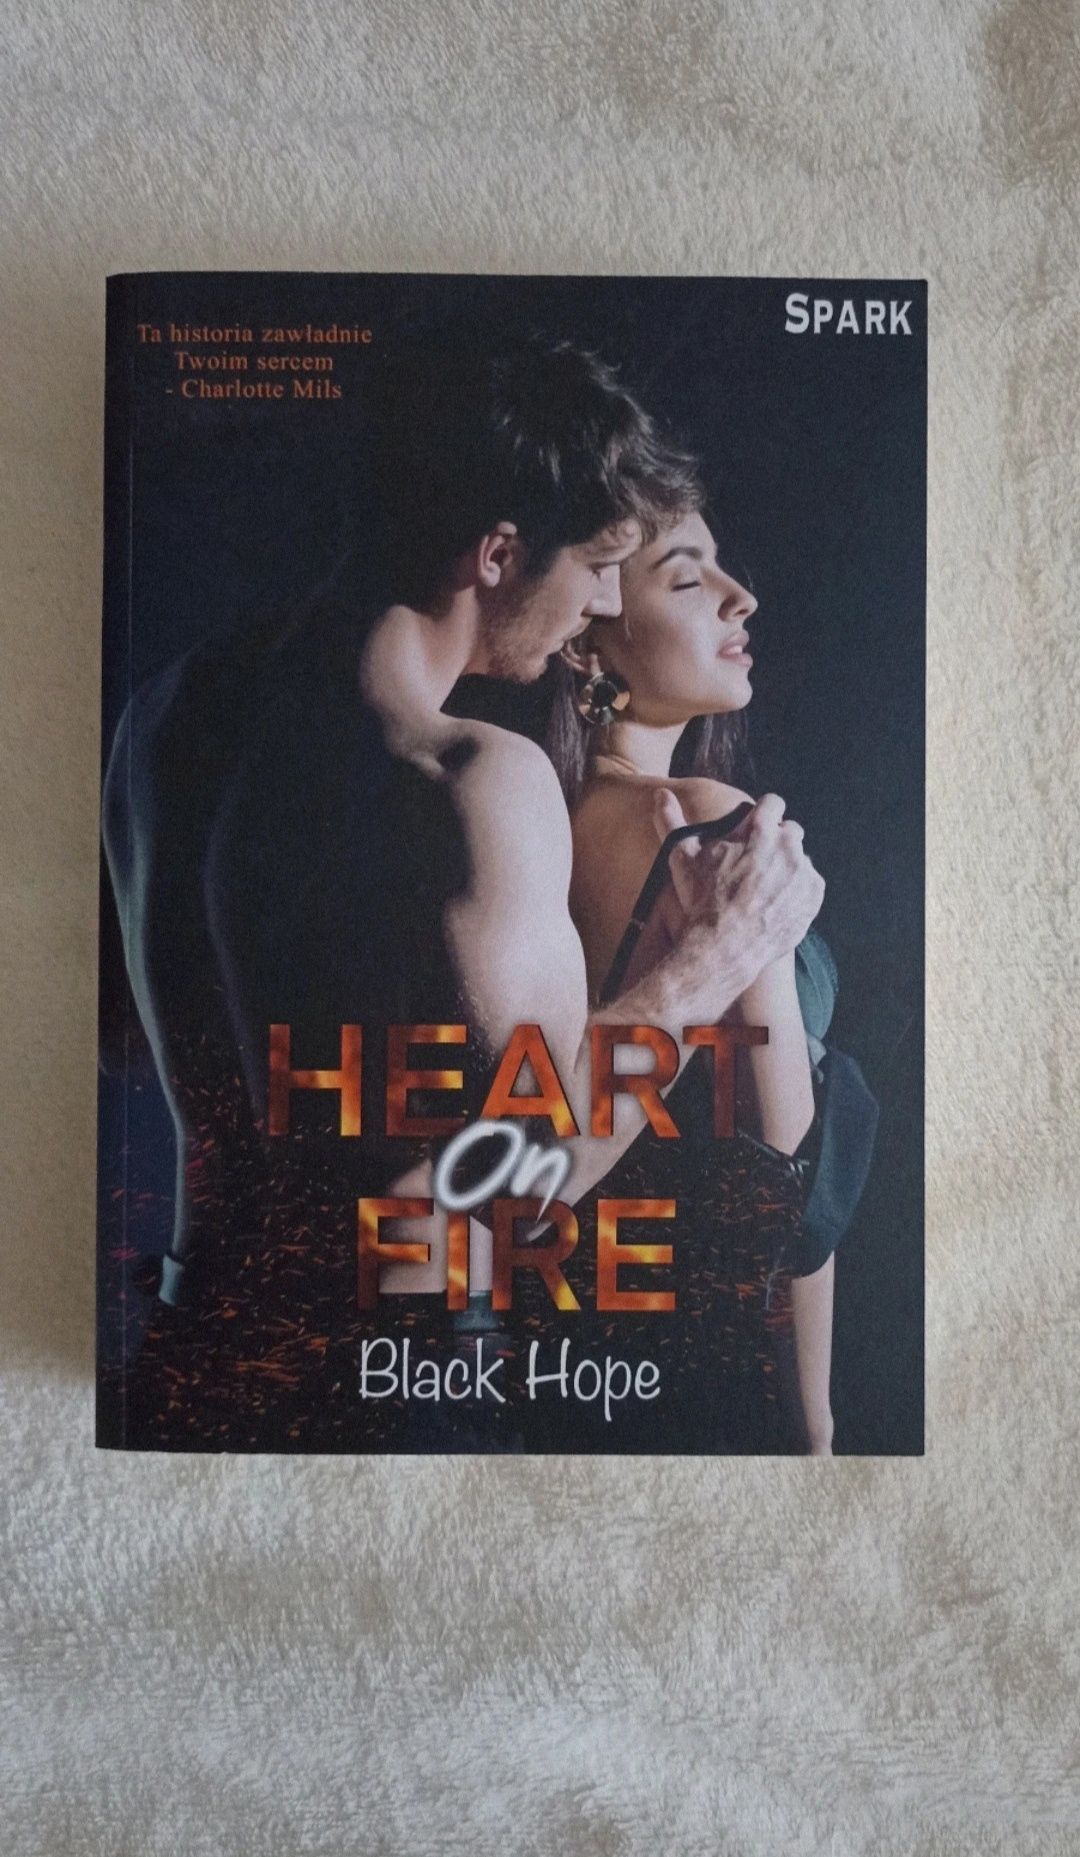 Black Hope - "heart on fire"